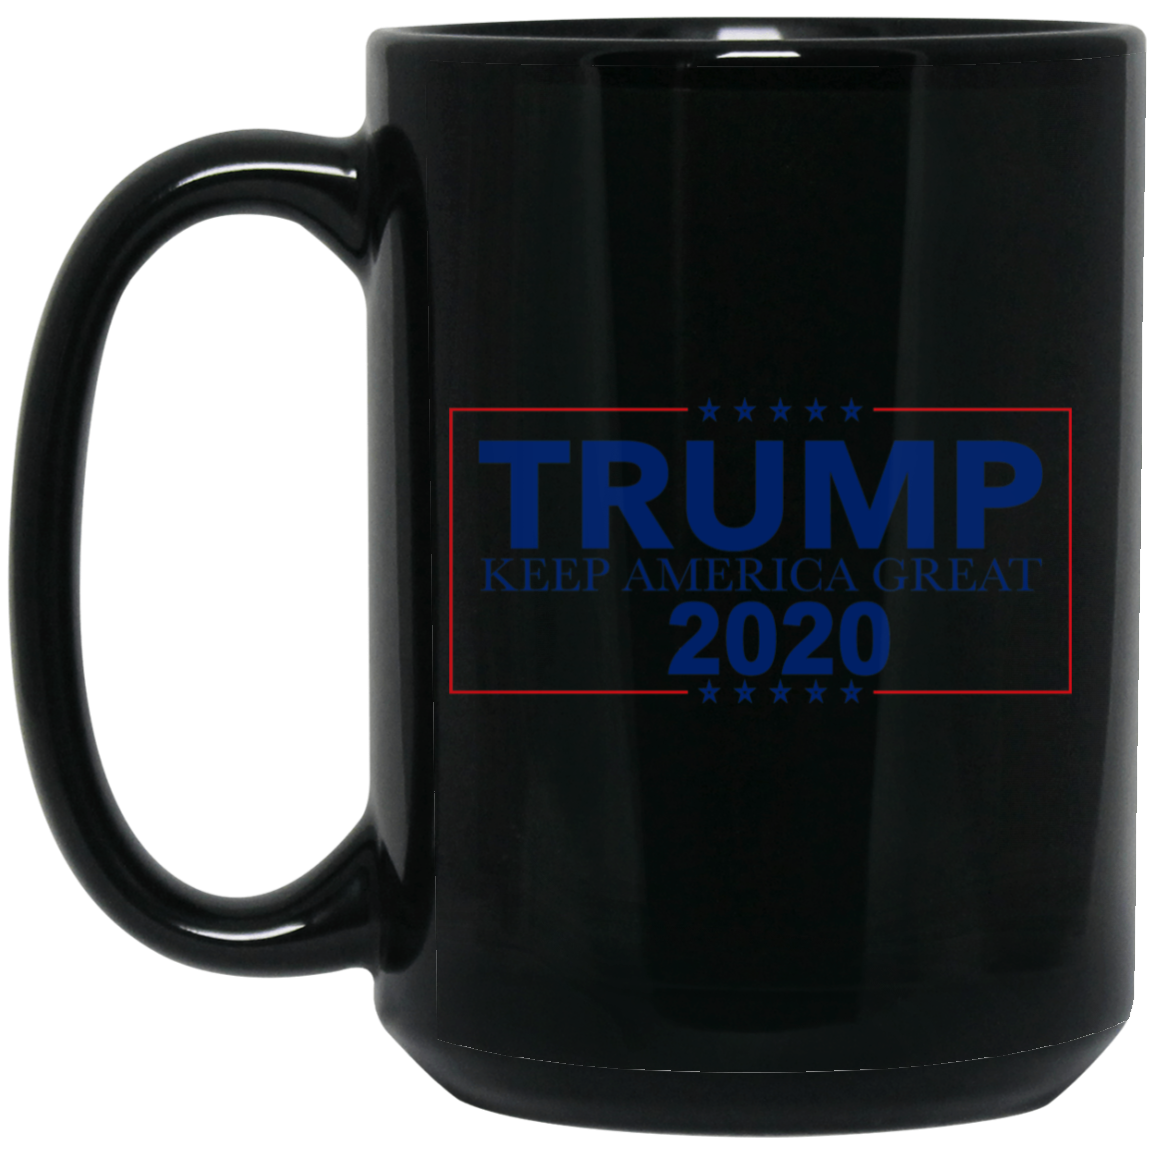 Keep America Great 2020 Slogan 15 oz. Black Mug - Trumpshop.net